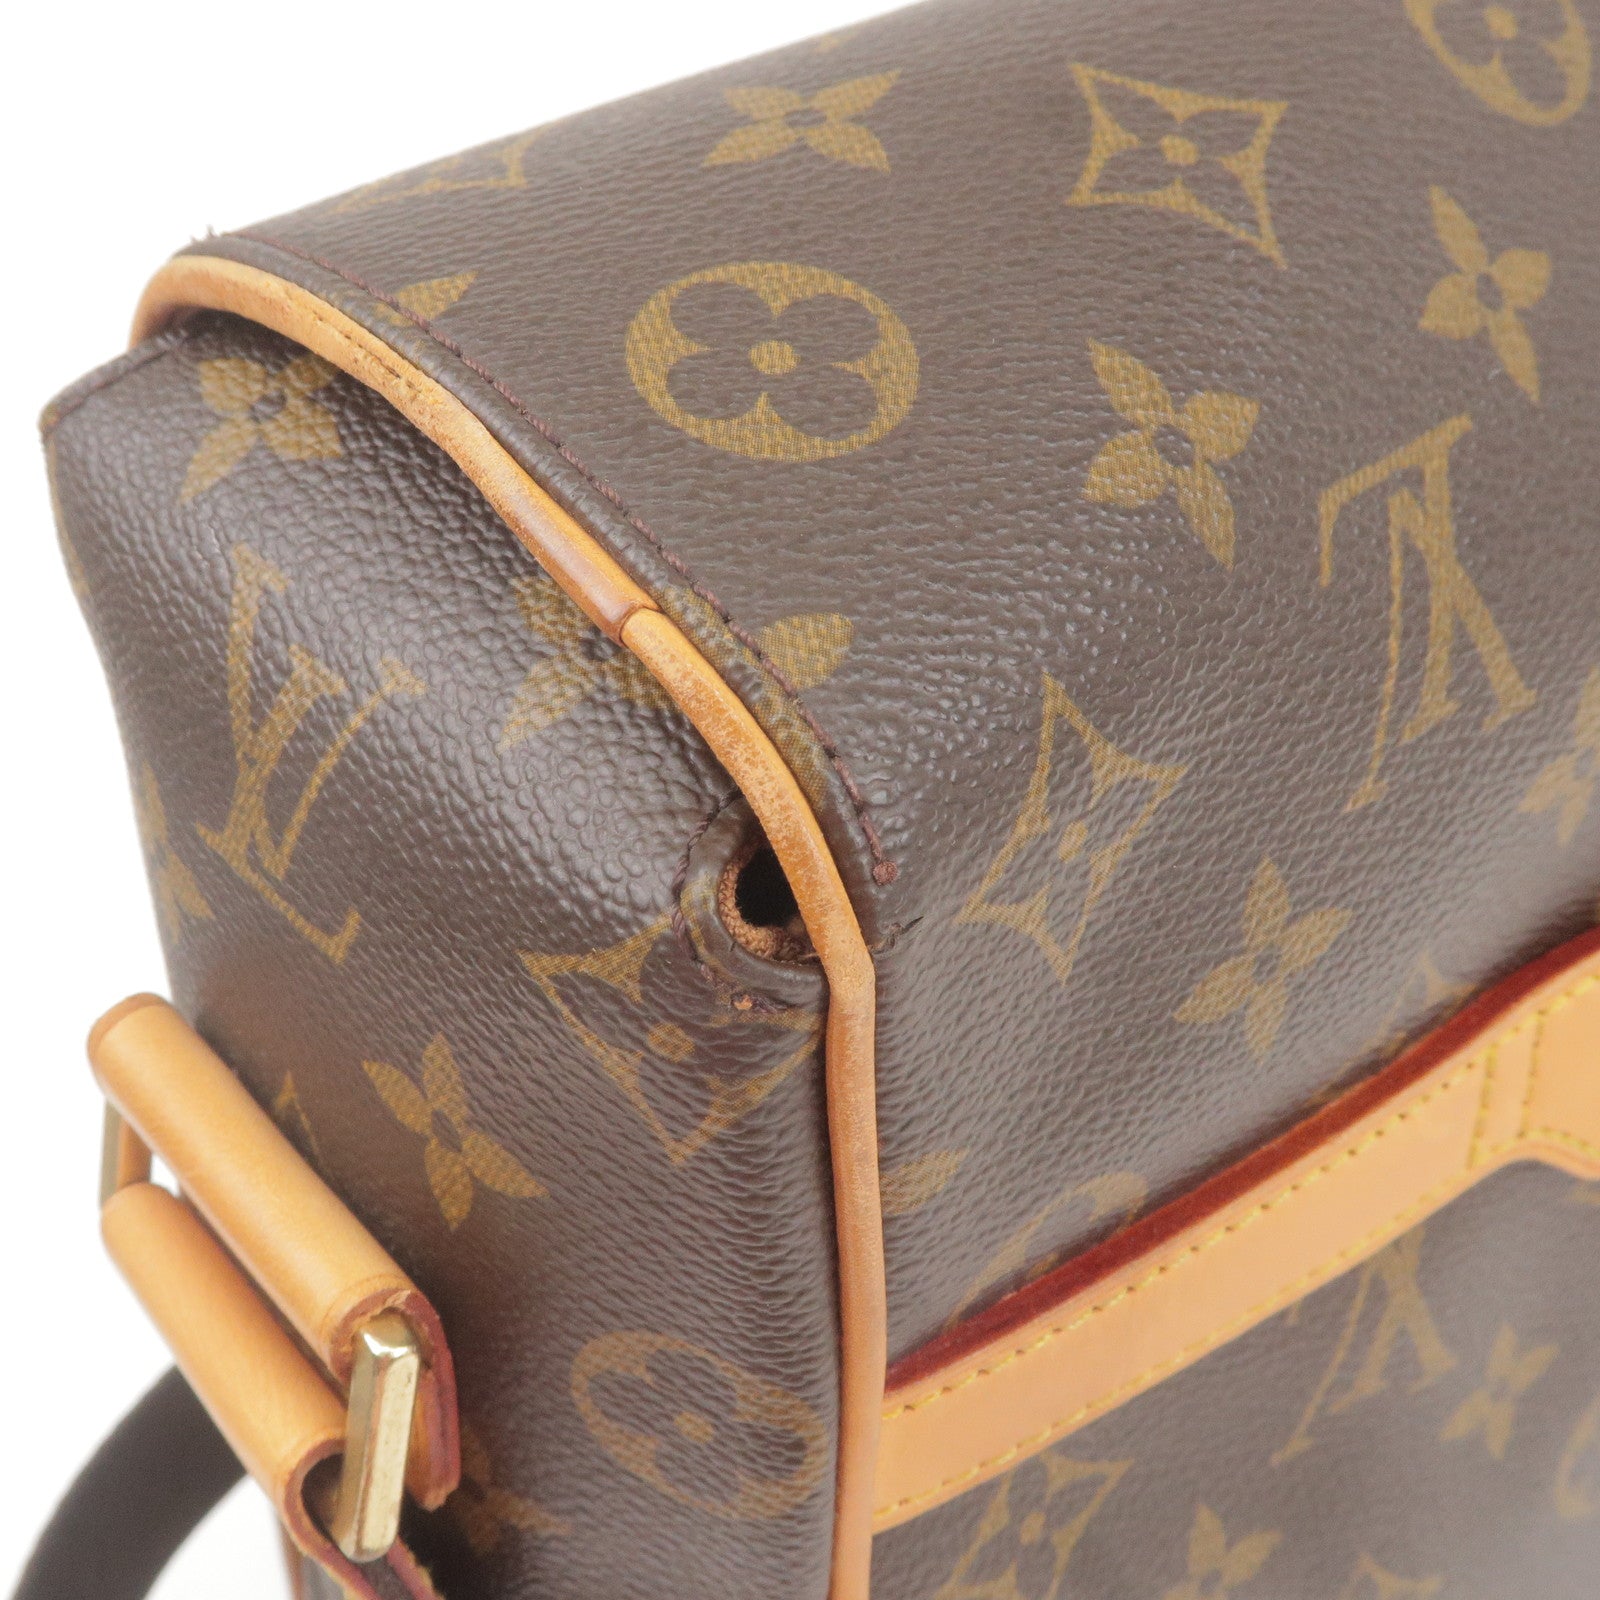 Louis Vuitton Monogram Bel Air Bag - Brown Satchels, Handbags